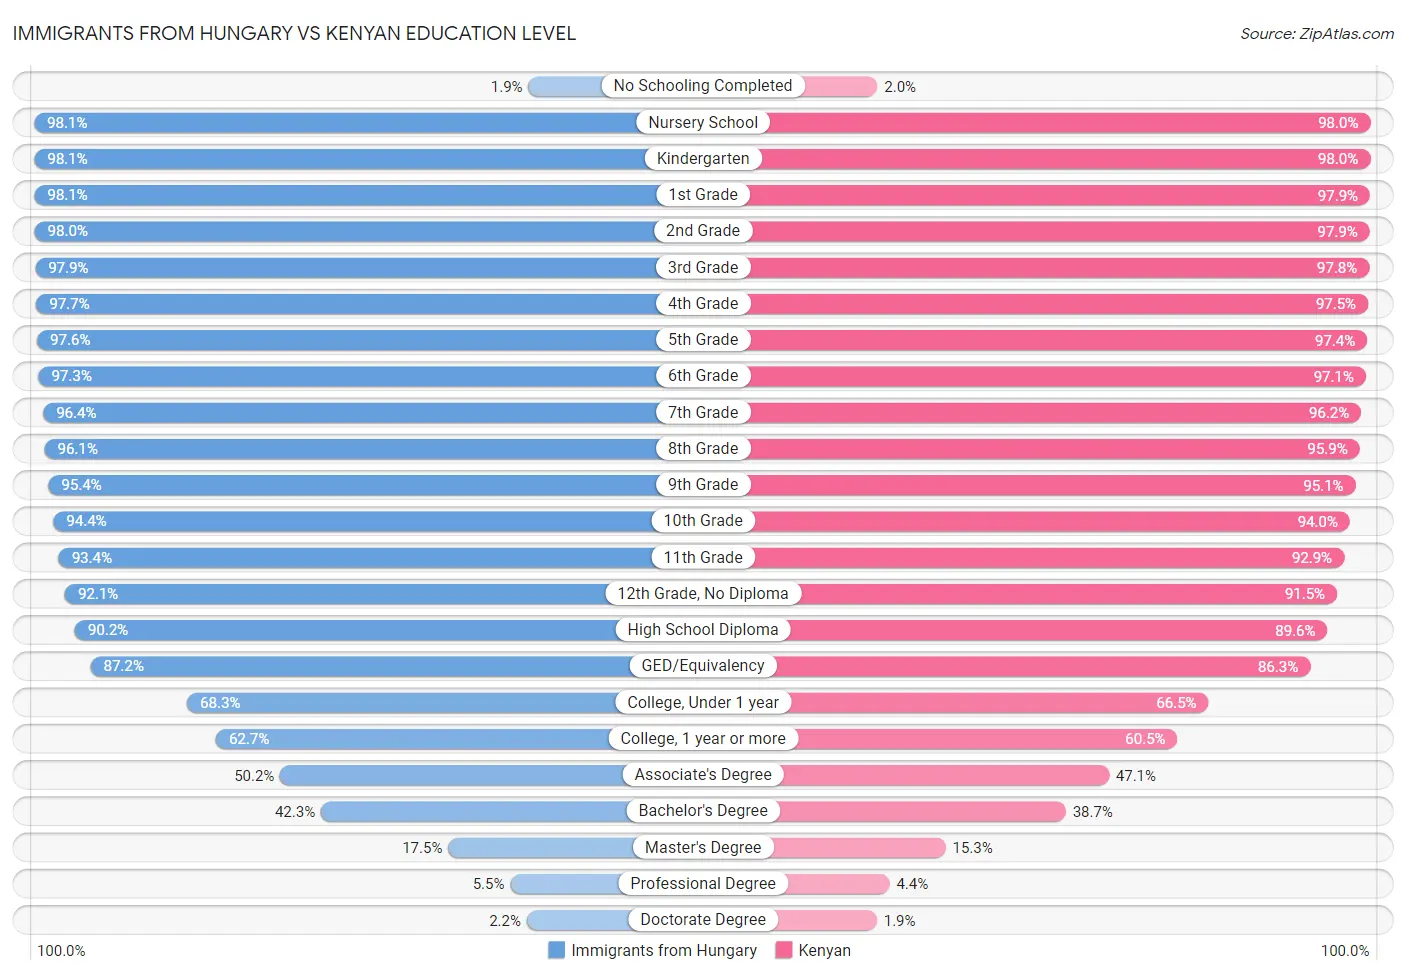 Immigrants from Hungary vs Kenyan Education Level